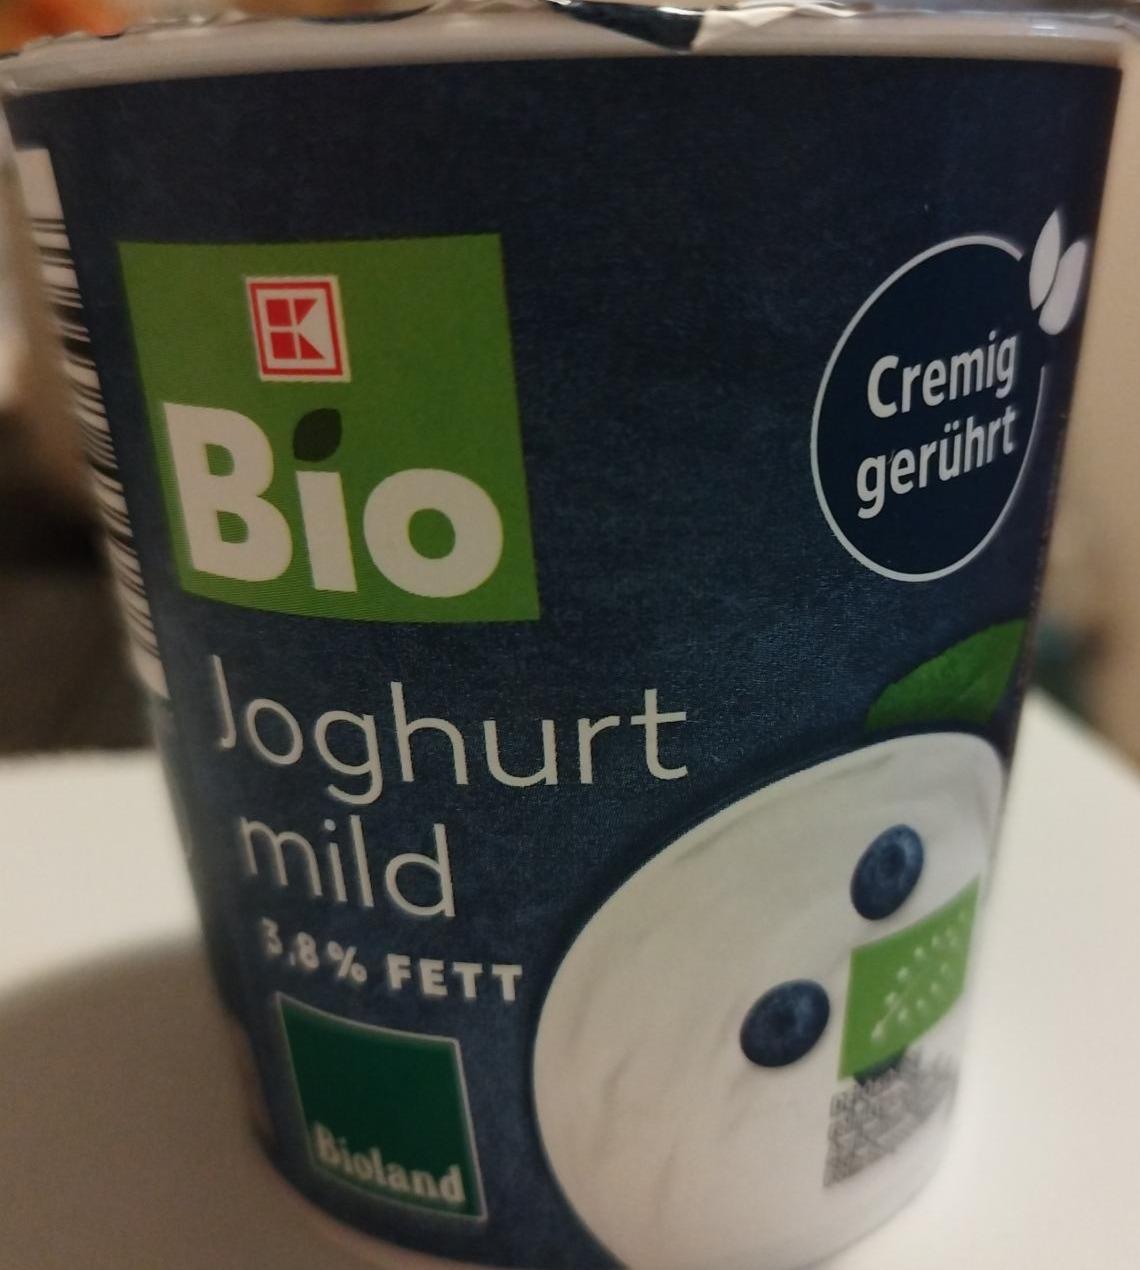 Joghurt mild 3,8% hodnoty a K-Bio fett nutričné - kJ kalórie